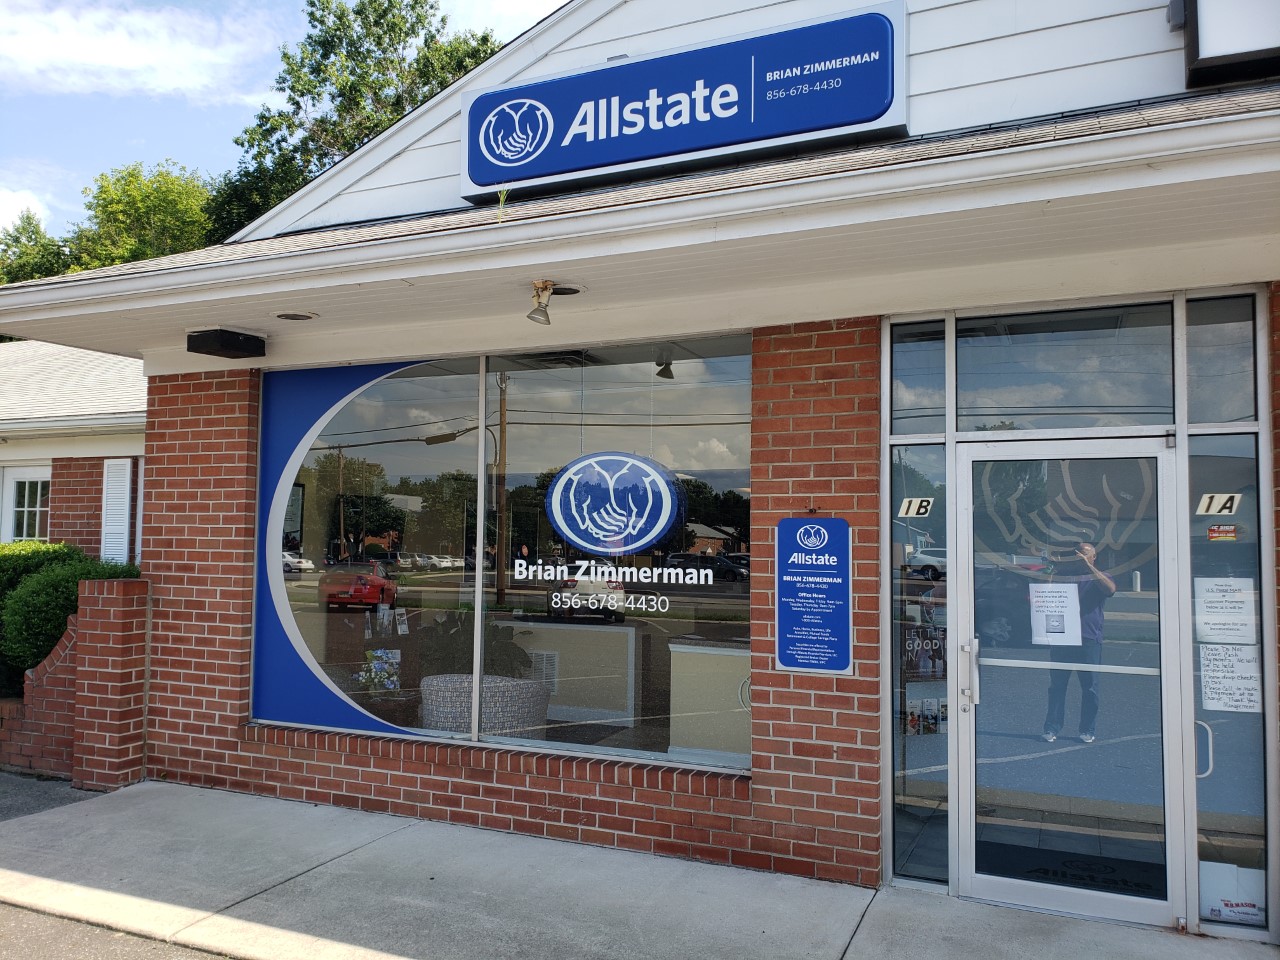 Brian Zimmerman: Allstate Insurance